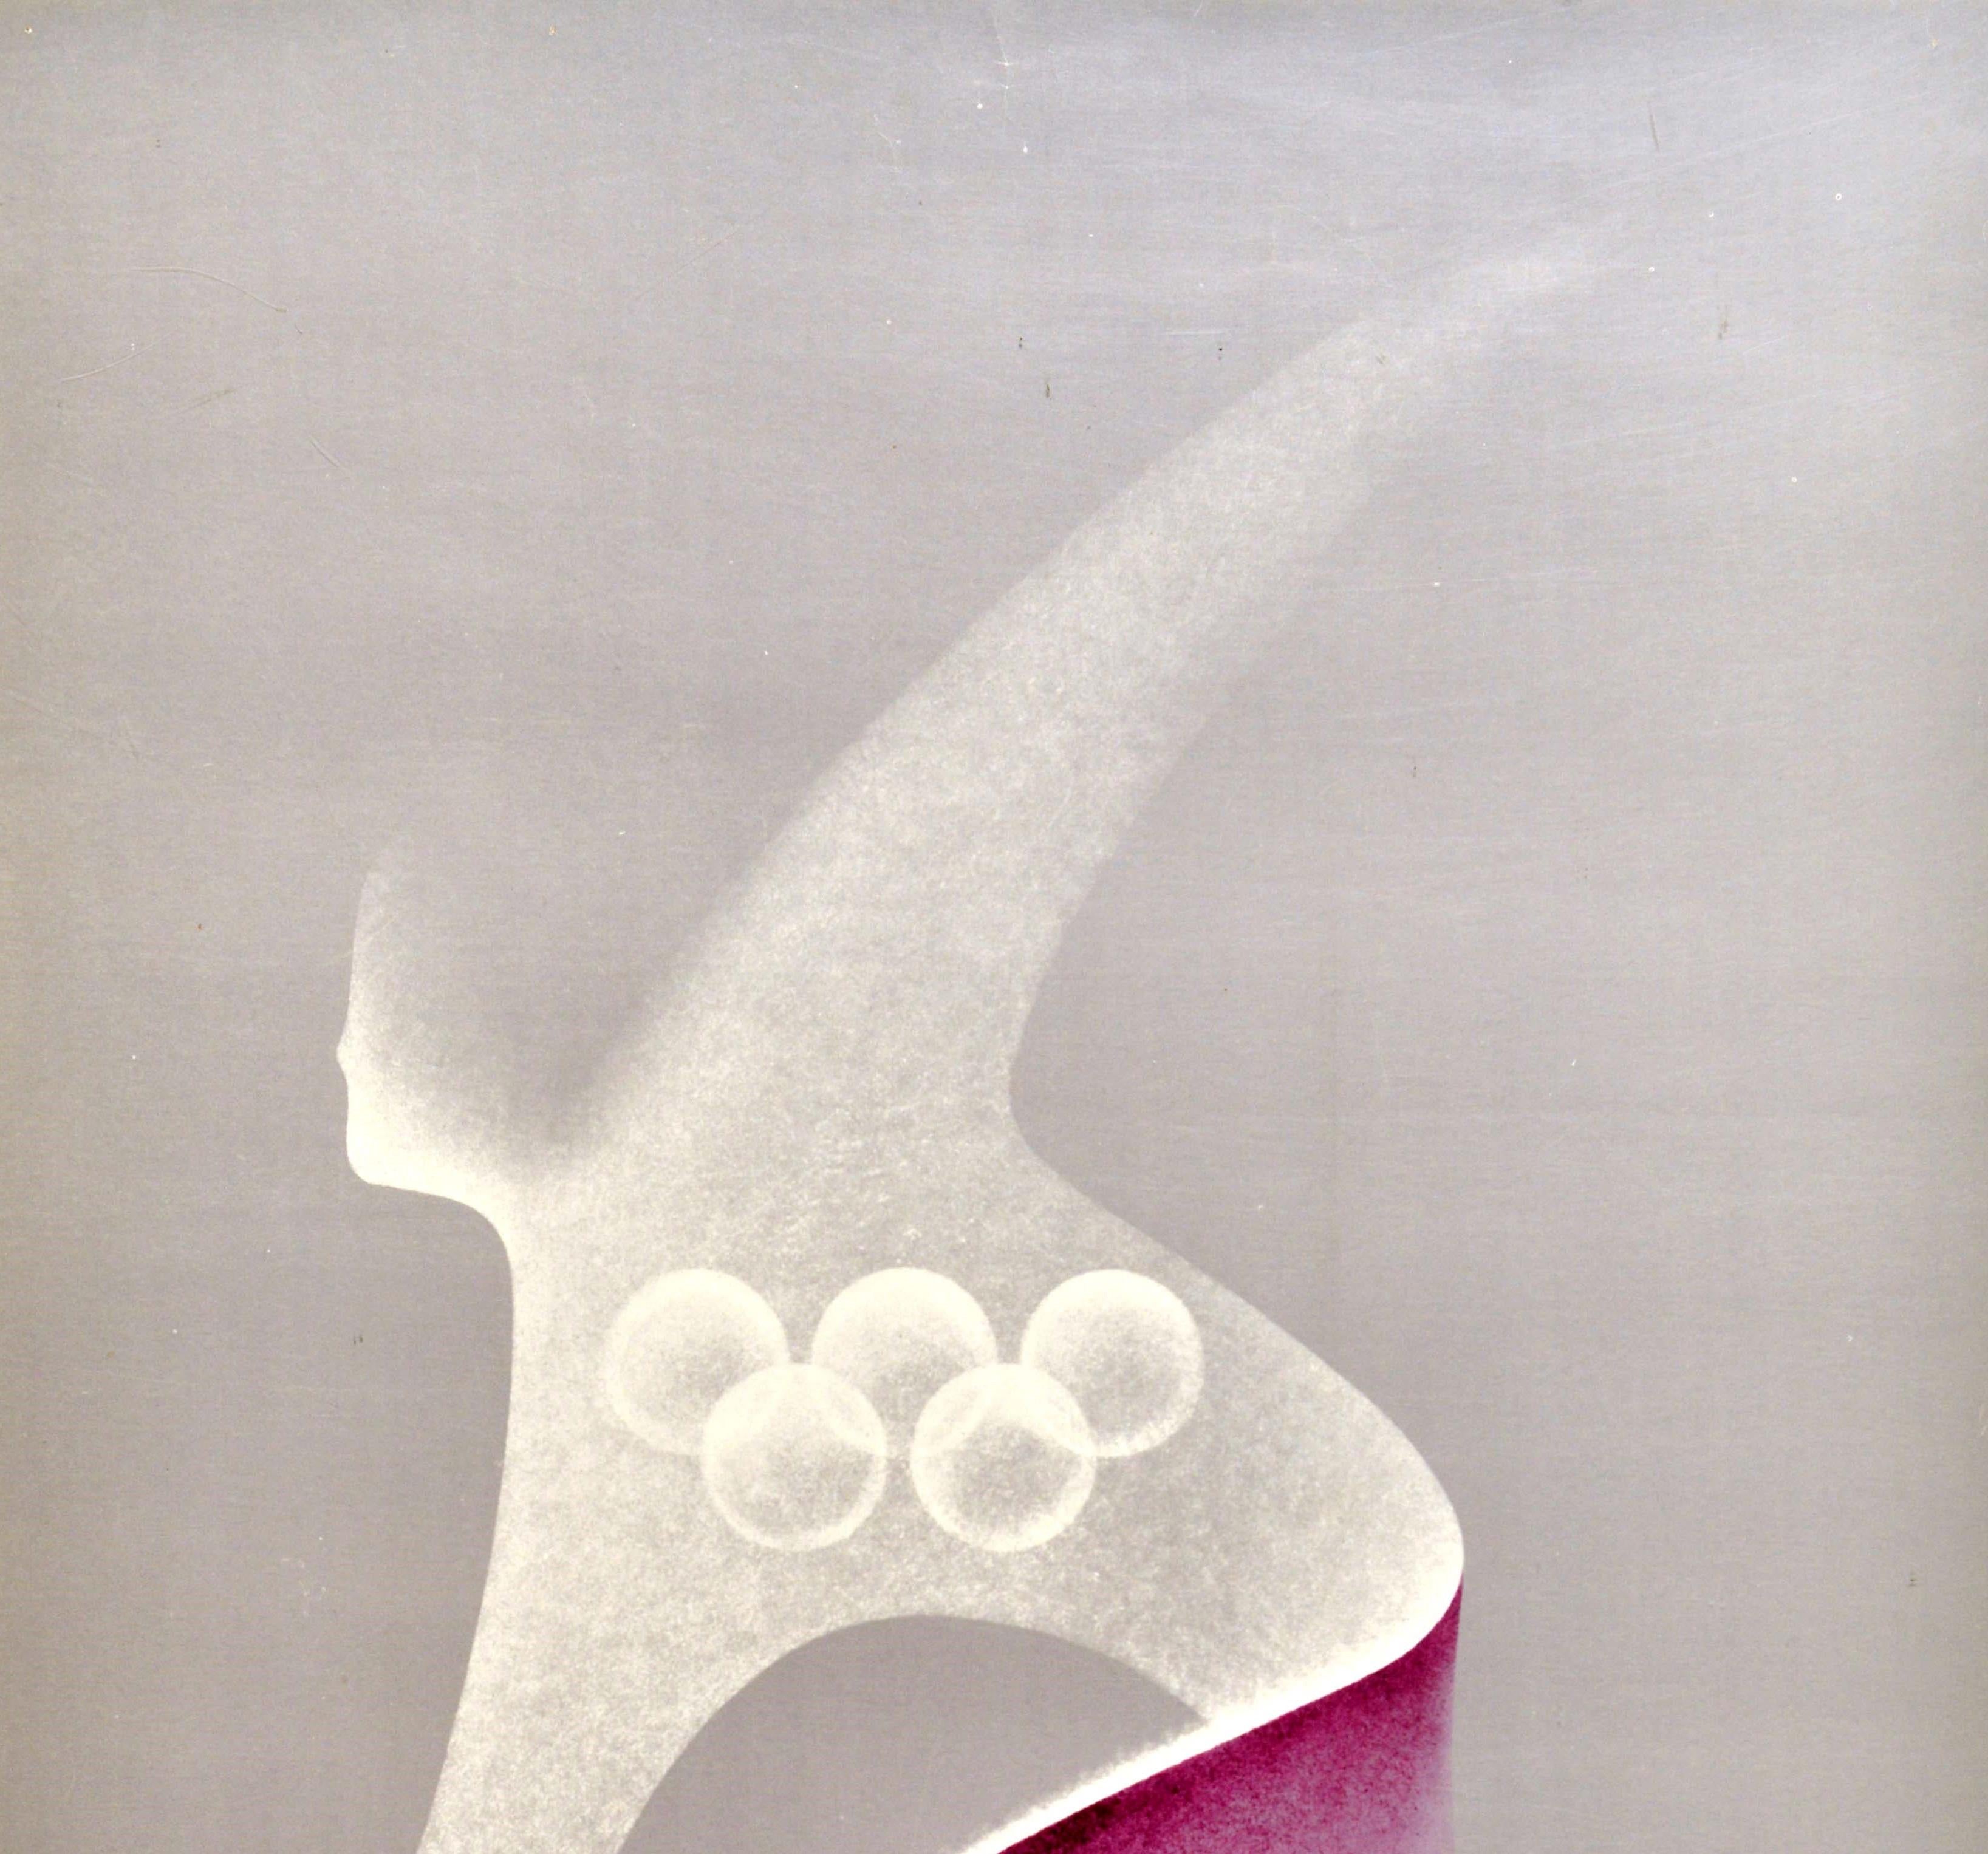 Original Vintage Poster Summer Olympic Games Moscow 1980 Athletics Sport Design - Print by Karol Sliwka